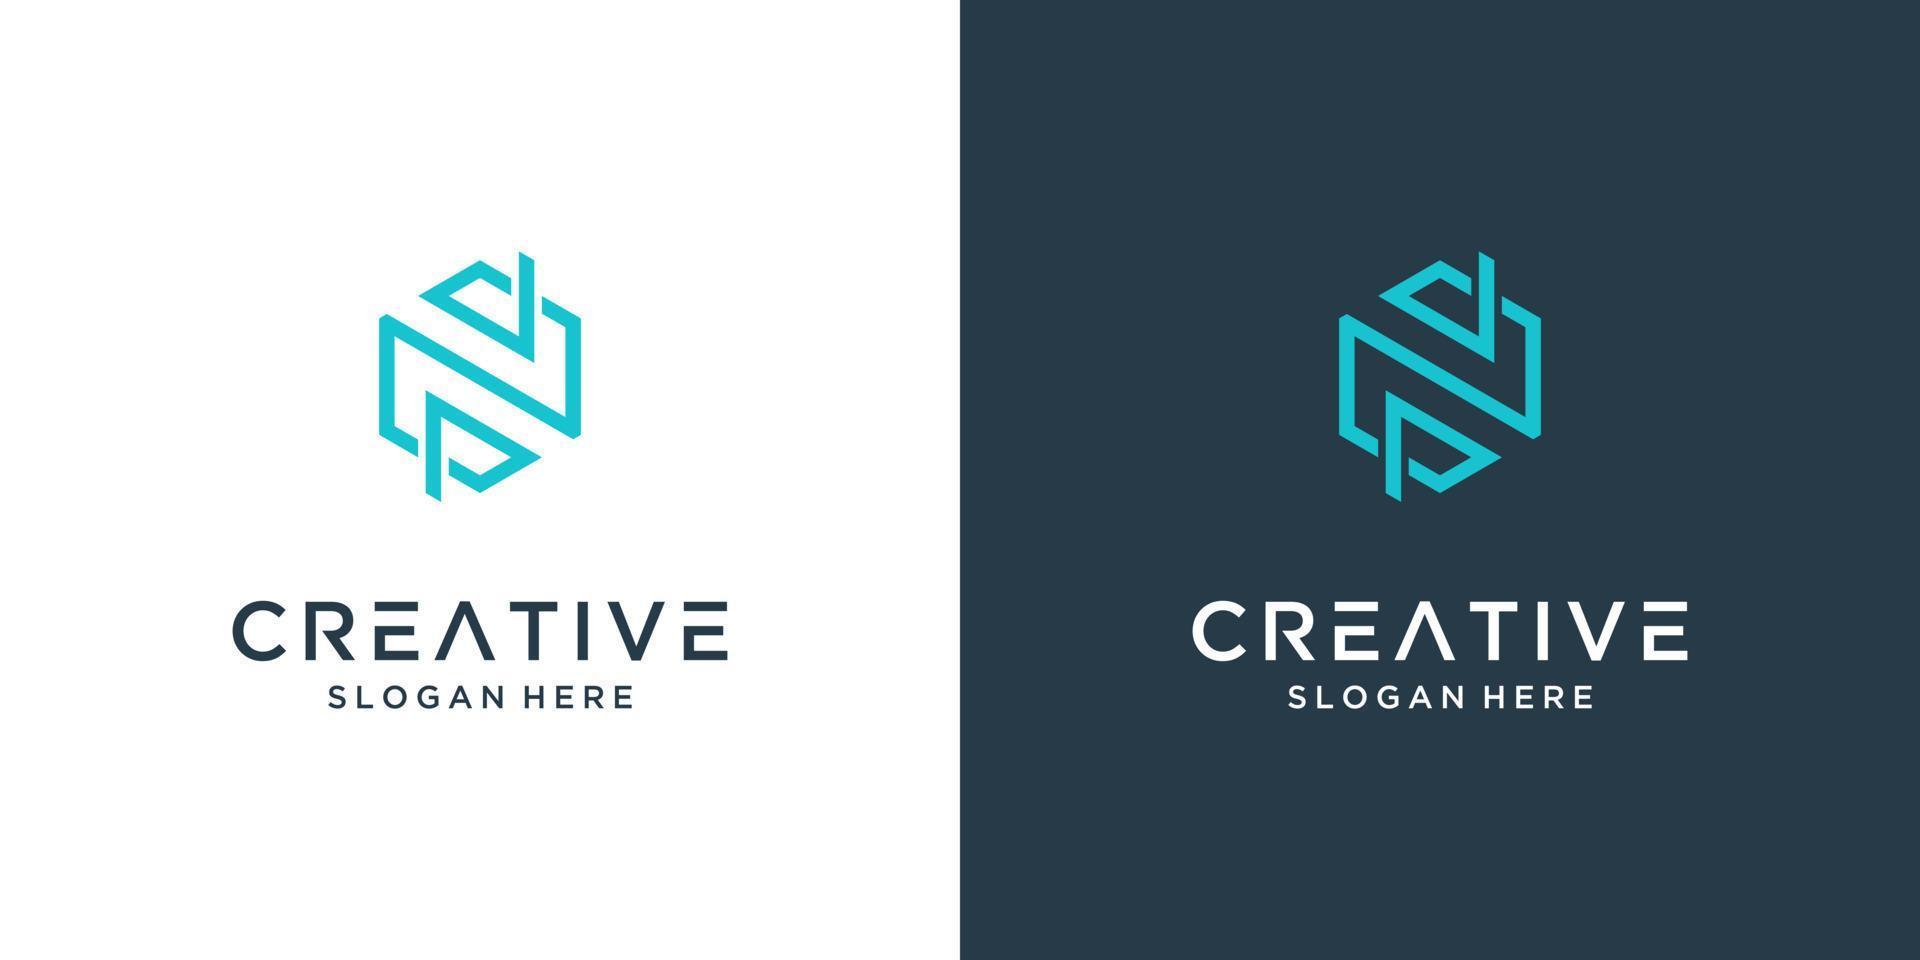 Creative letter N logo design inspiration vector